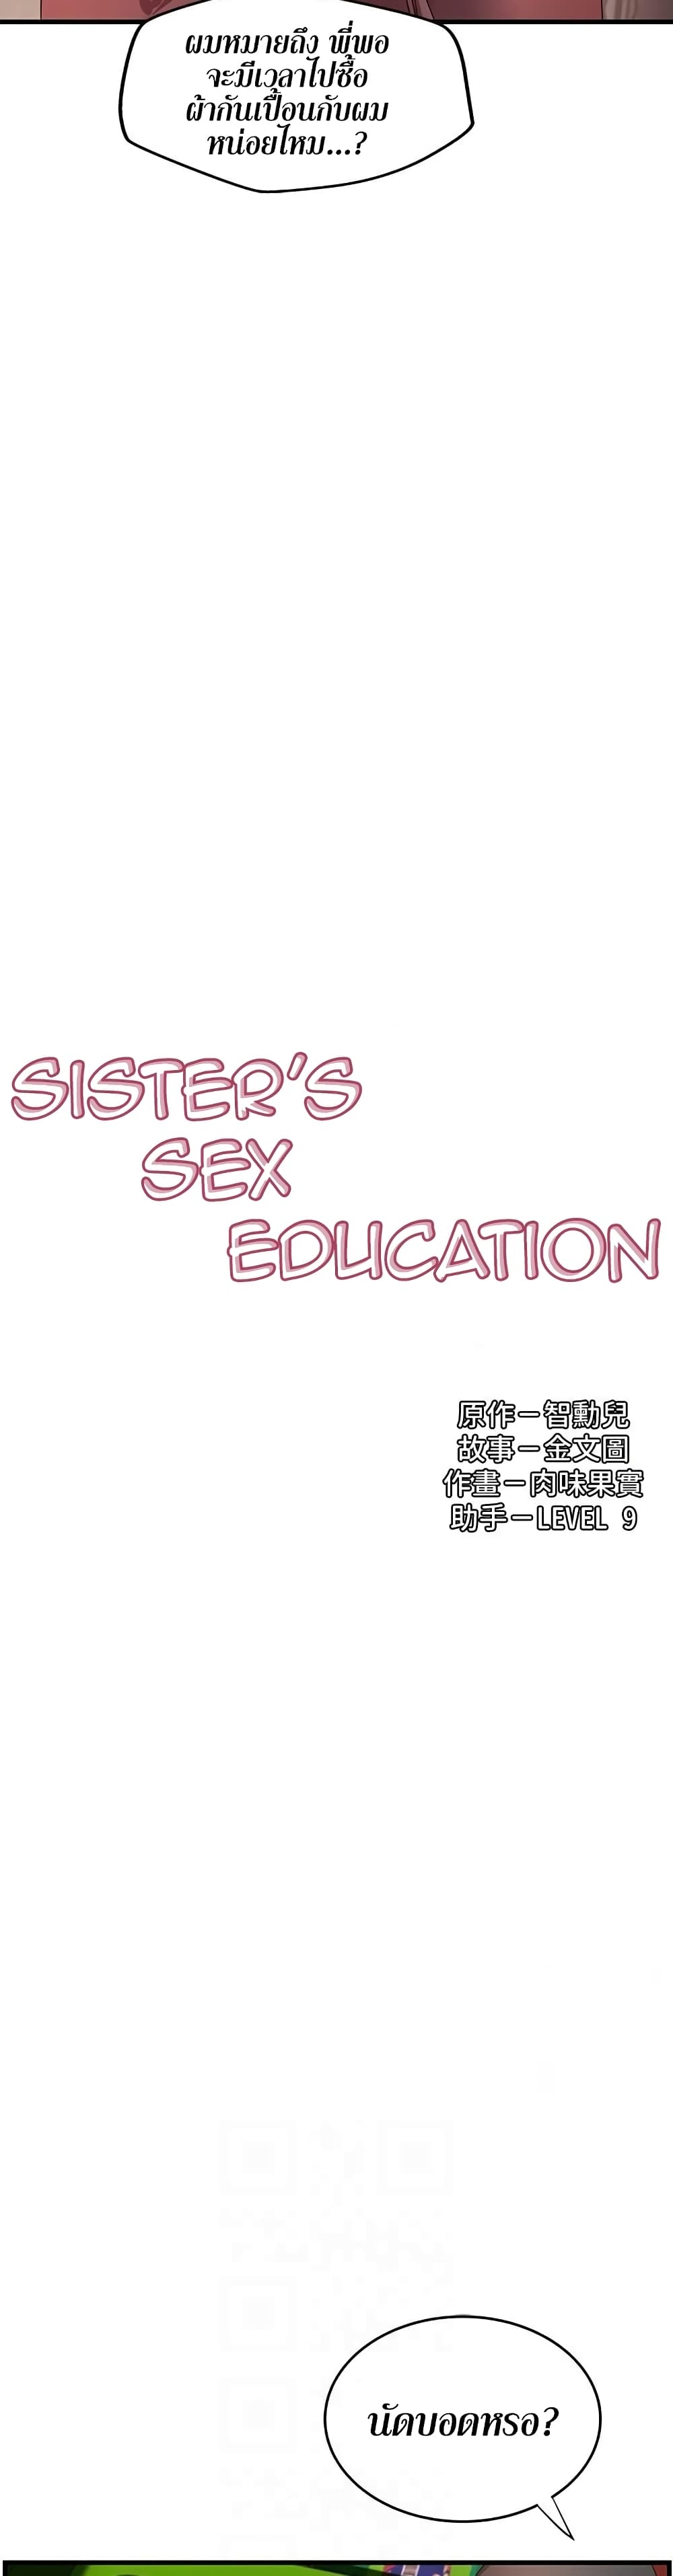 Sister's Sex Education 14 (4)